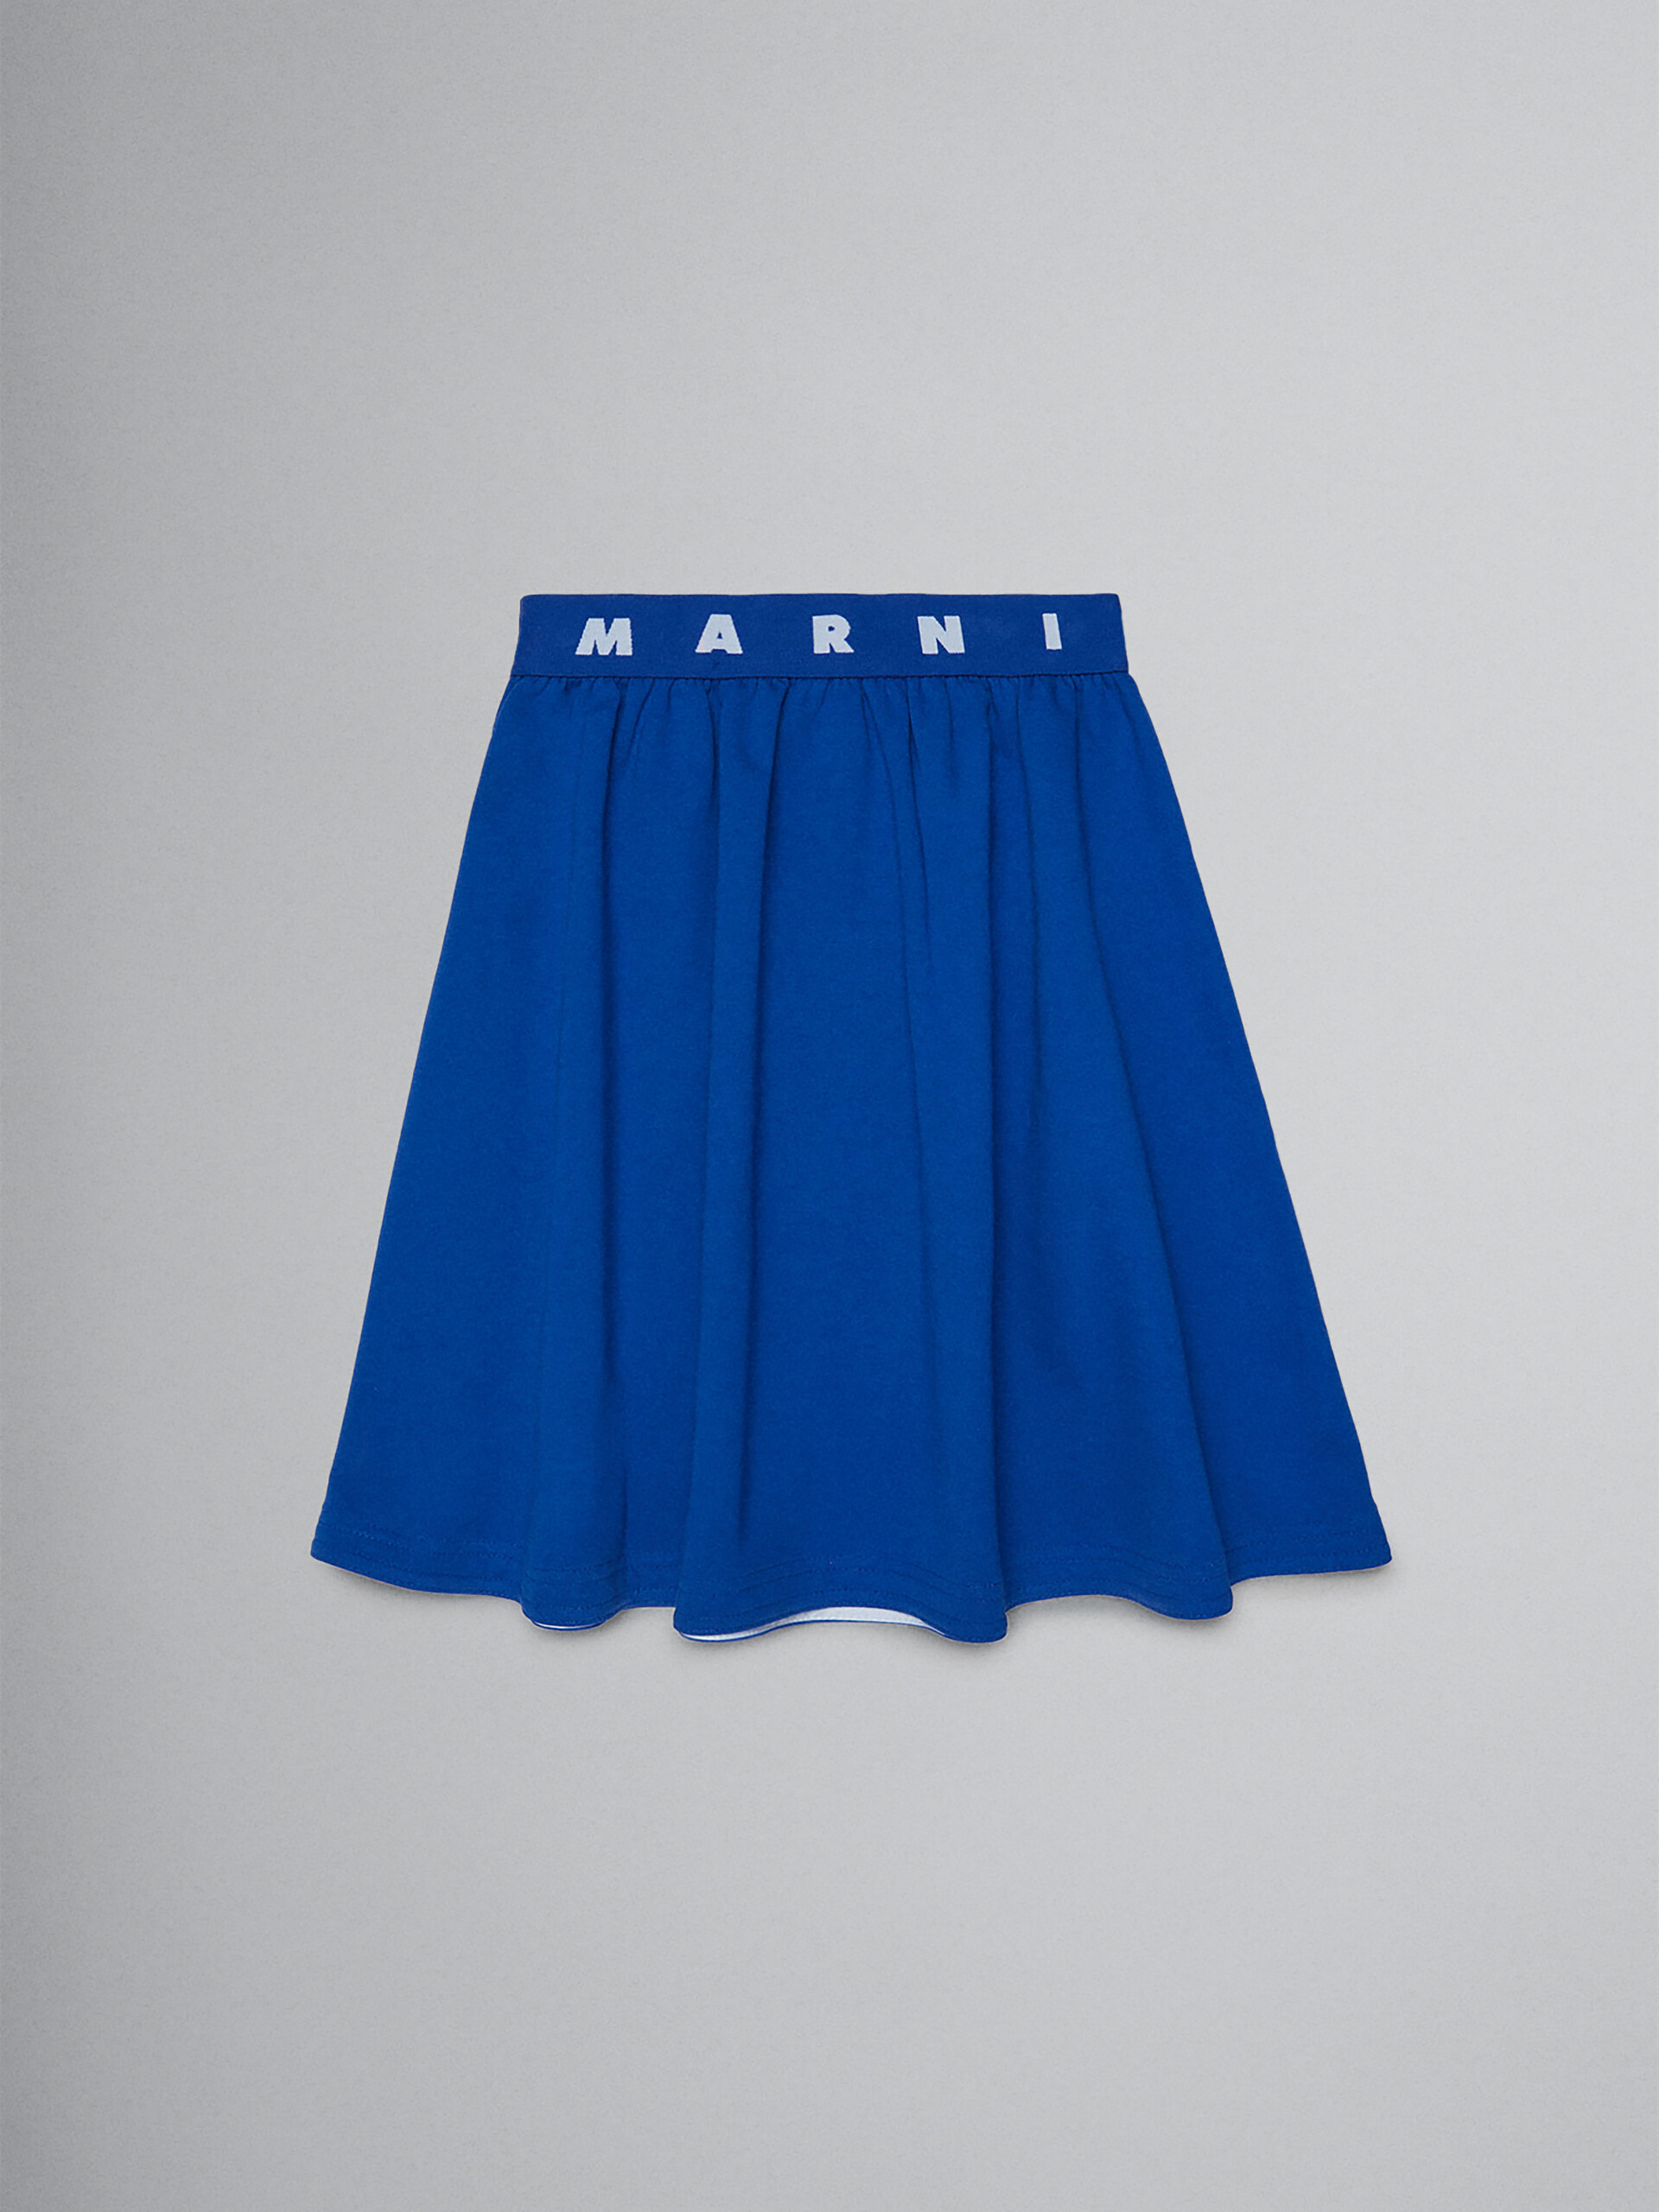 Blue fleece skirt with Daisy motif - Skirts - Image 2